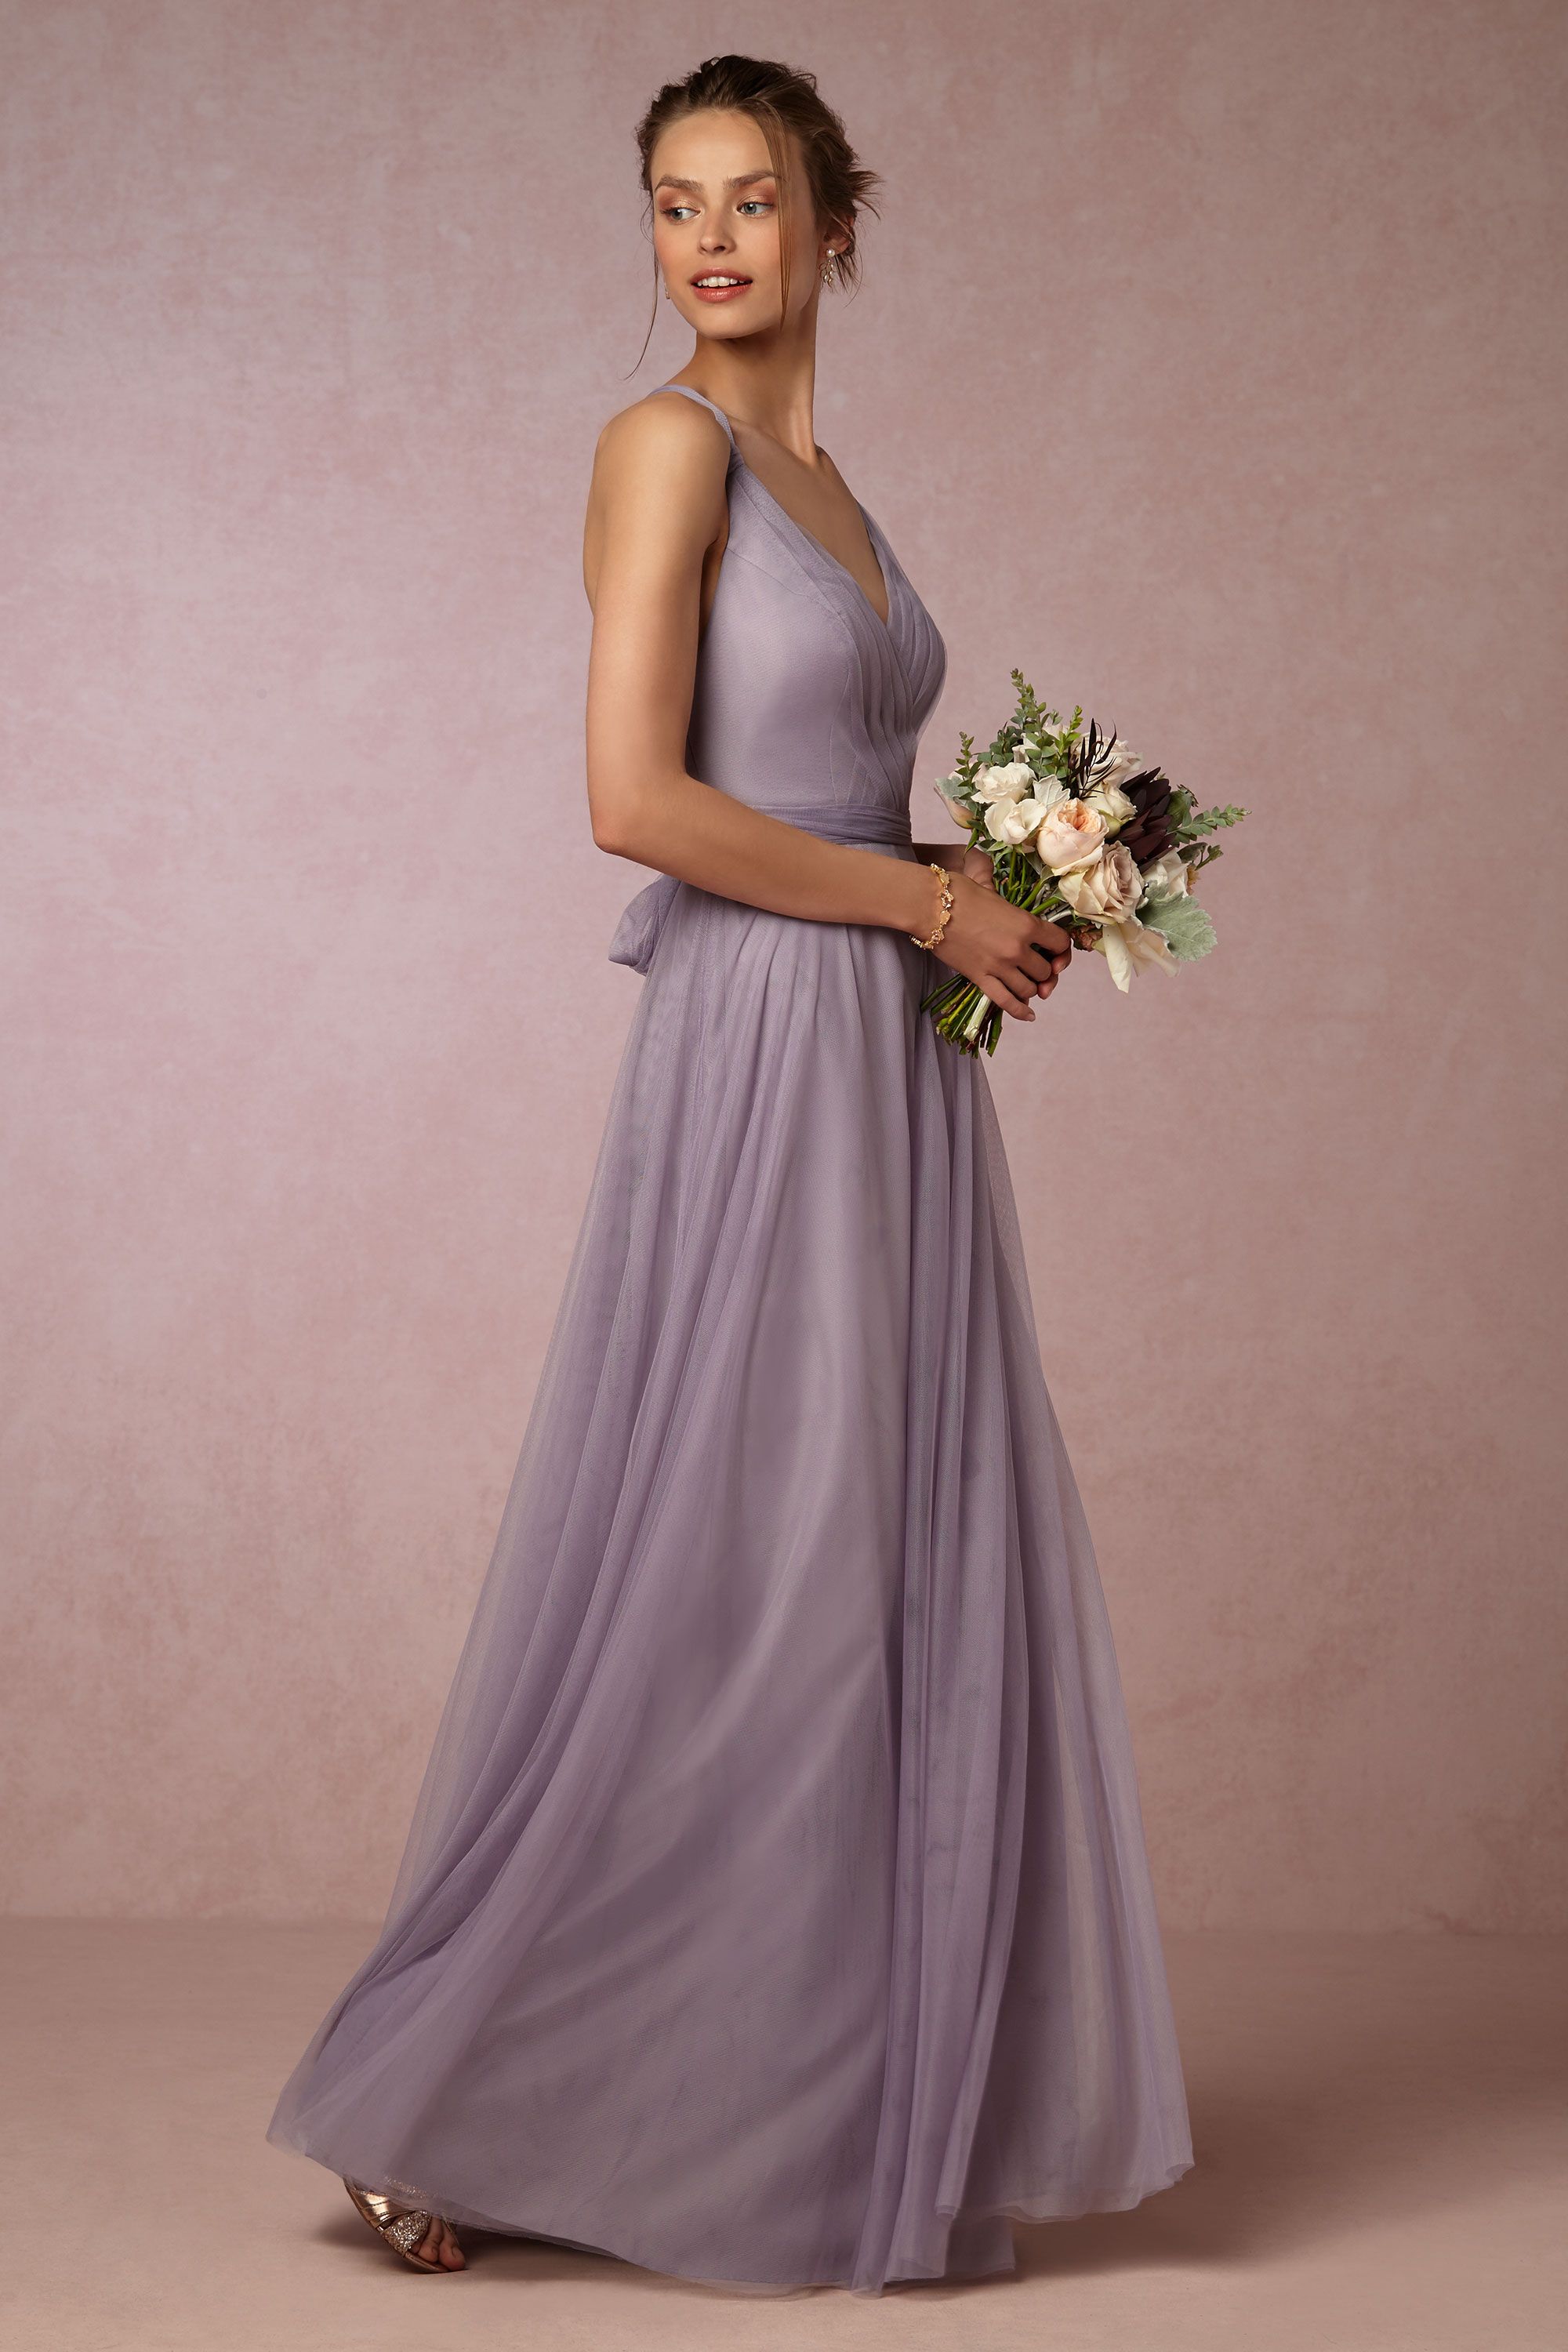 Zaria Dress in Bridesmaids & Bridal Party | BHLDN